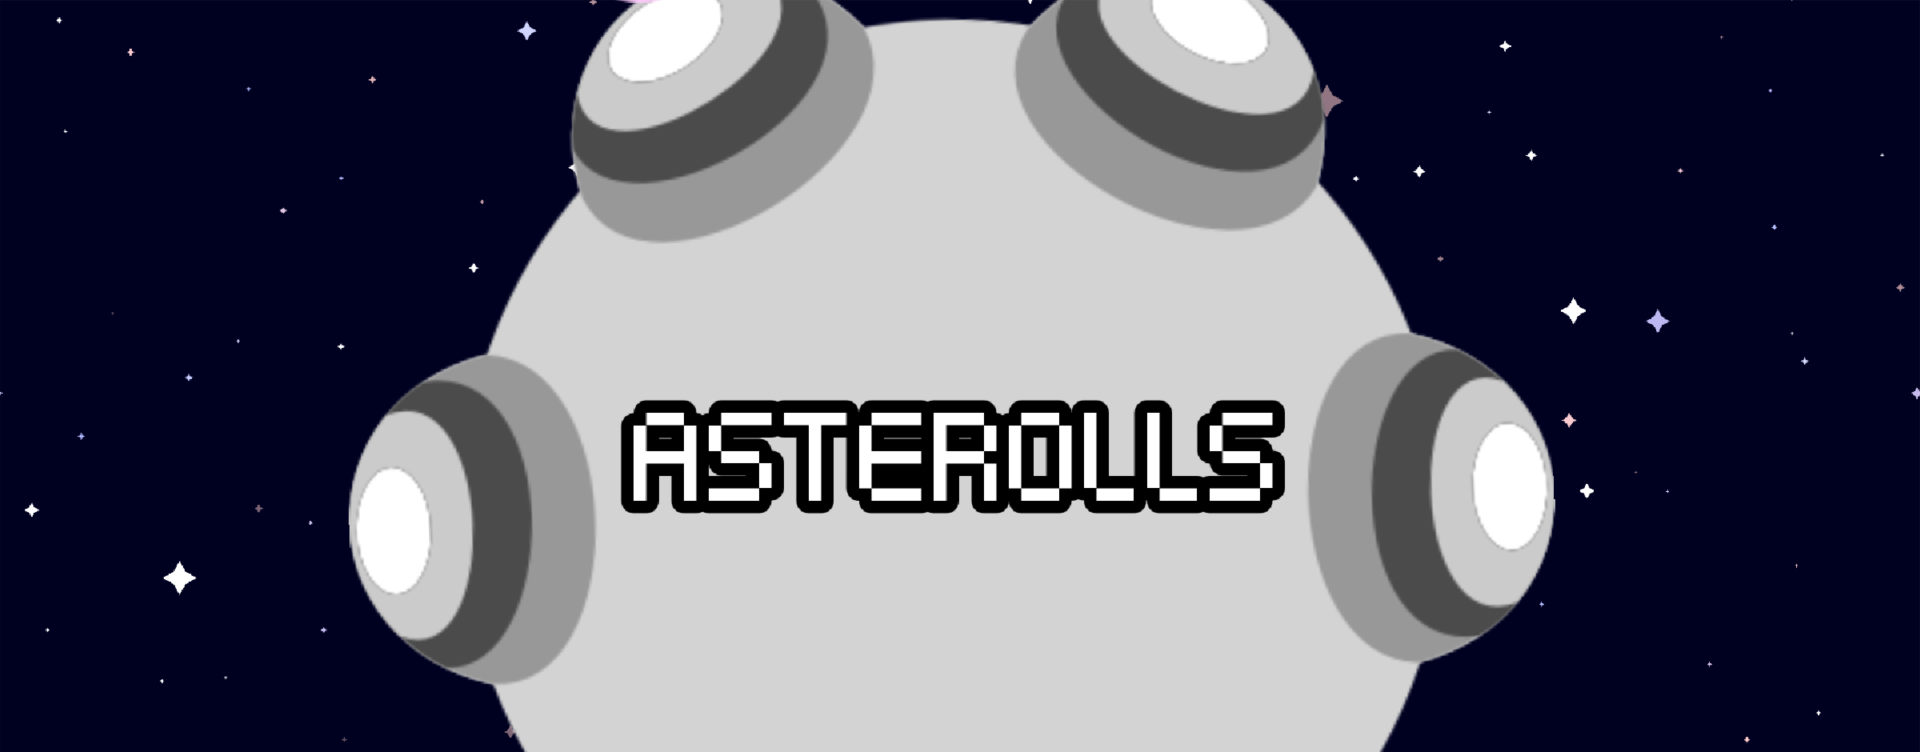 Asterolls